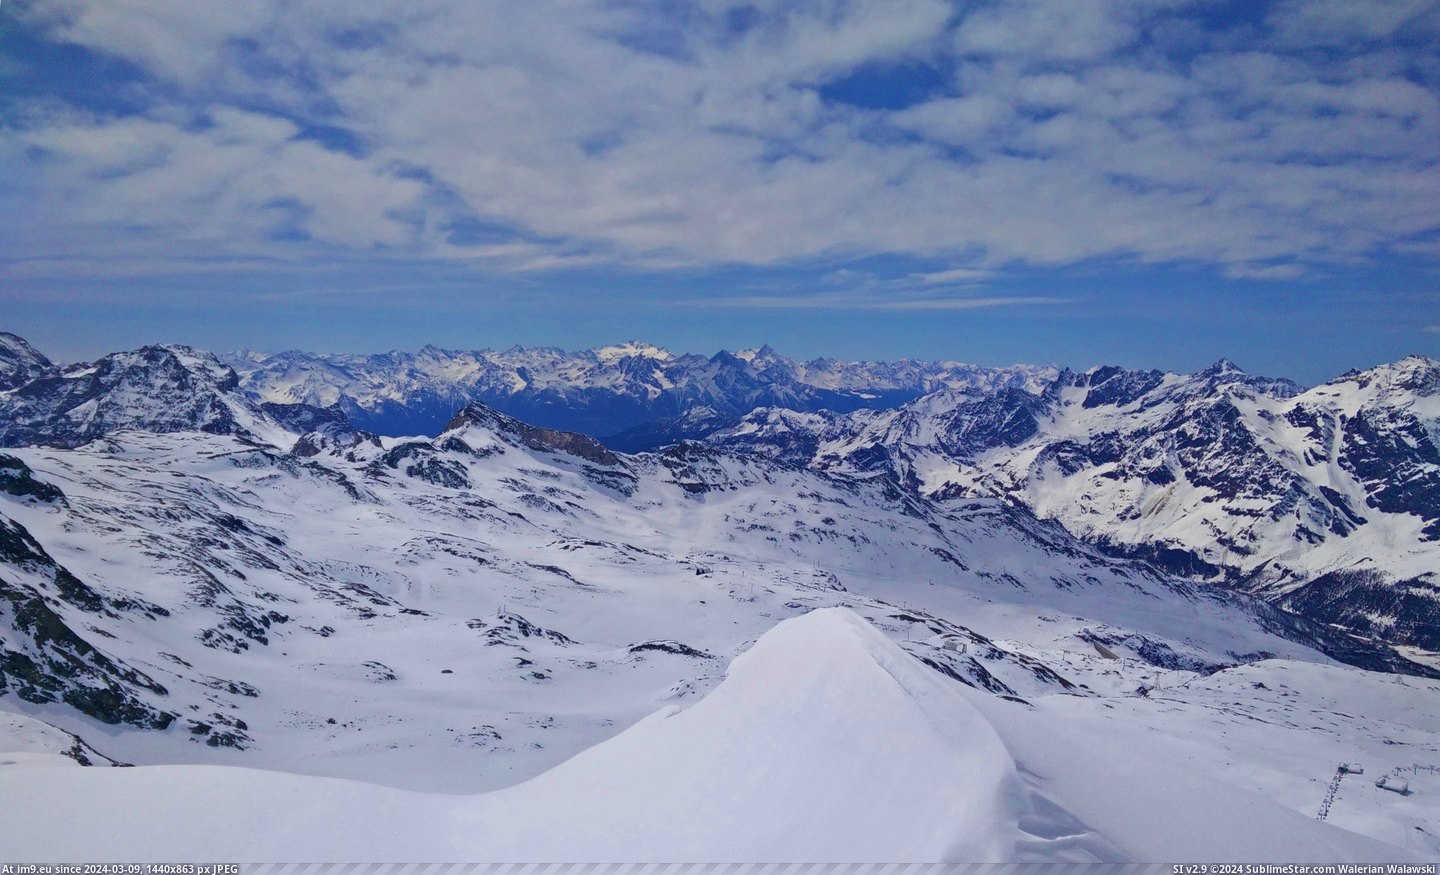 #Italian #Switzerland #Unedited #Alps #Matterhorn [Earthporn] Italian Alps, as seen from the Matterhorn, Switzerland. Unedited.  (4048x2440) Pic. (Bild von album My r/EARTHPORN favs))